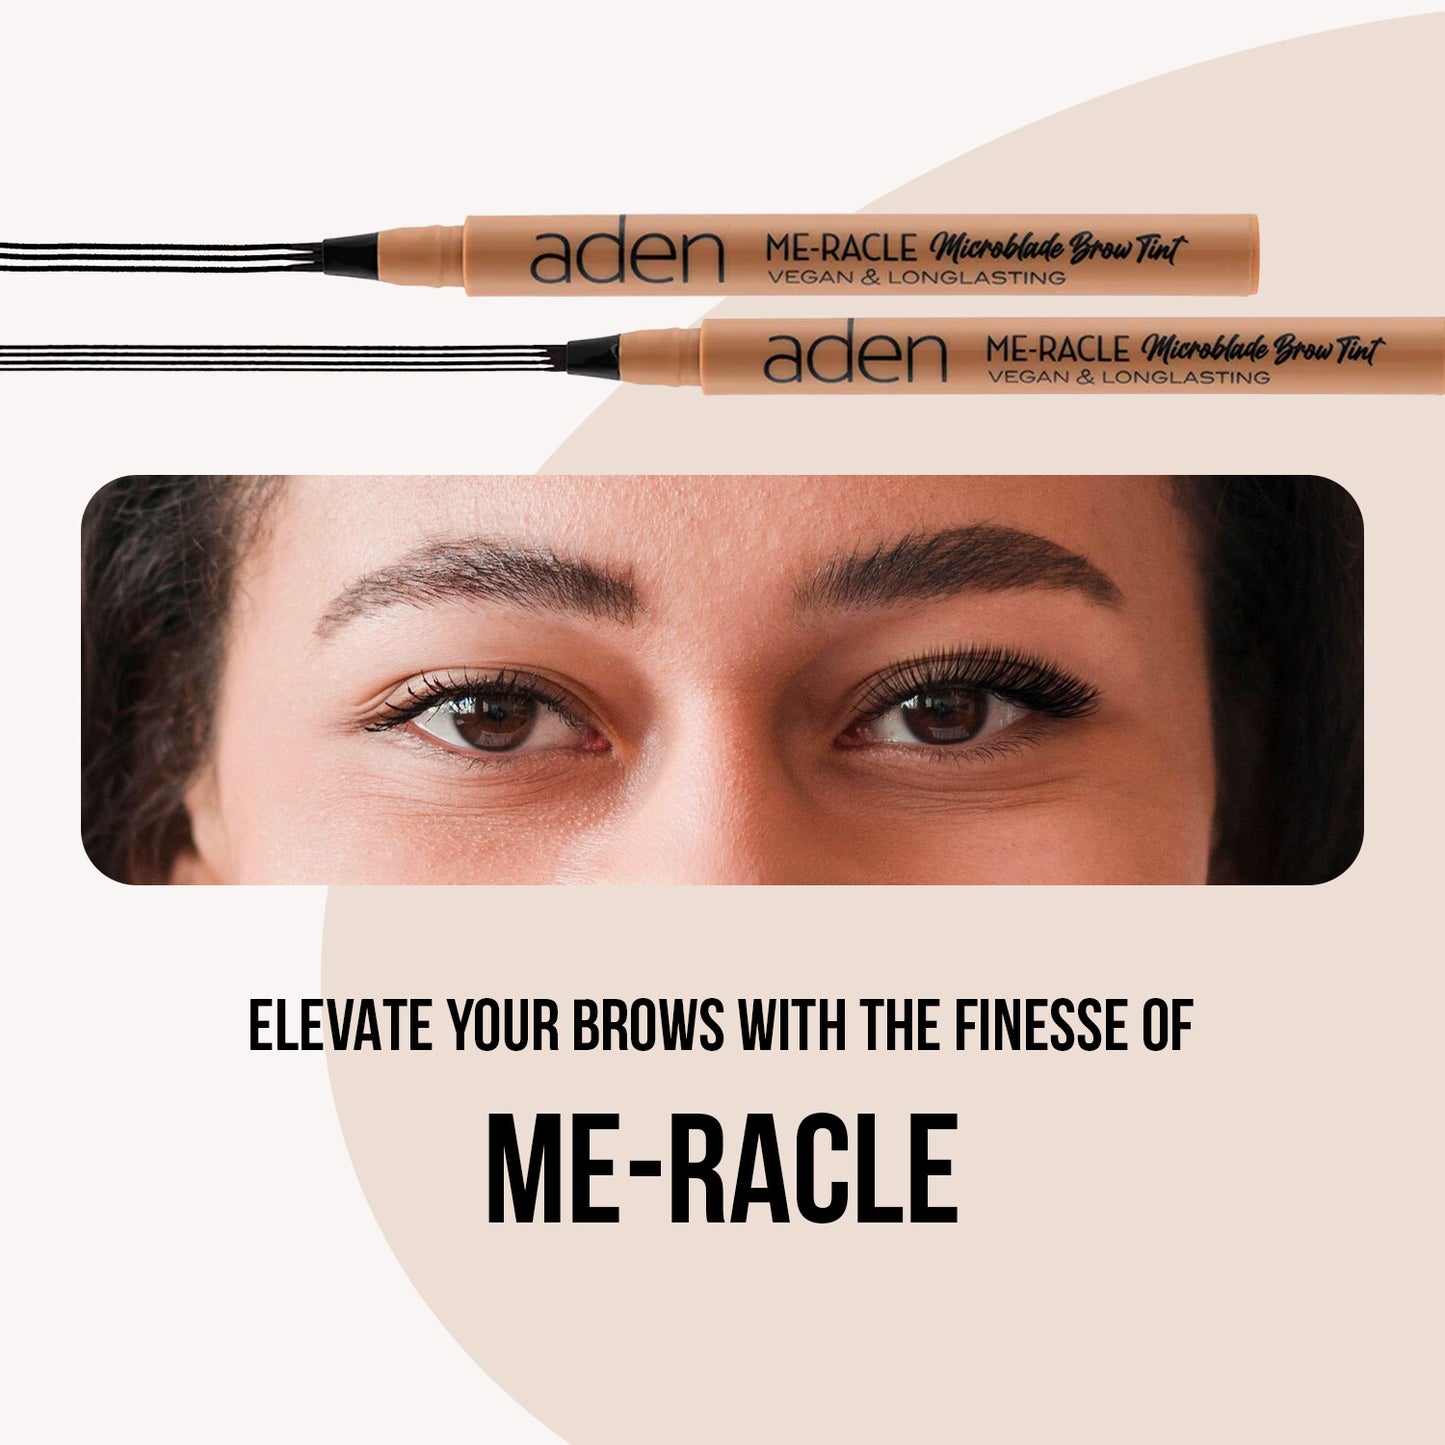 aden ME-RACLE Microblading Brow Tint